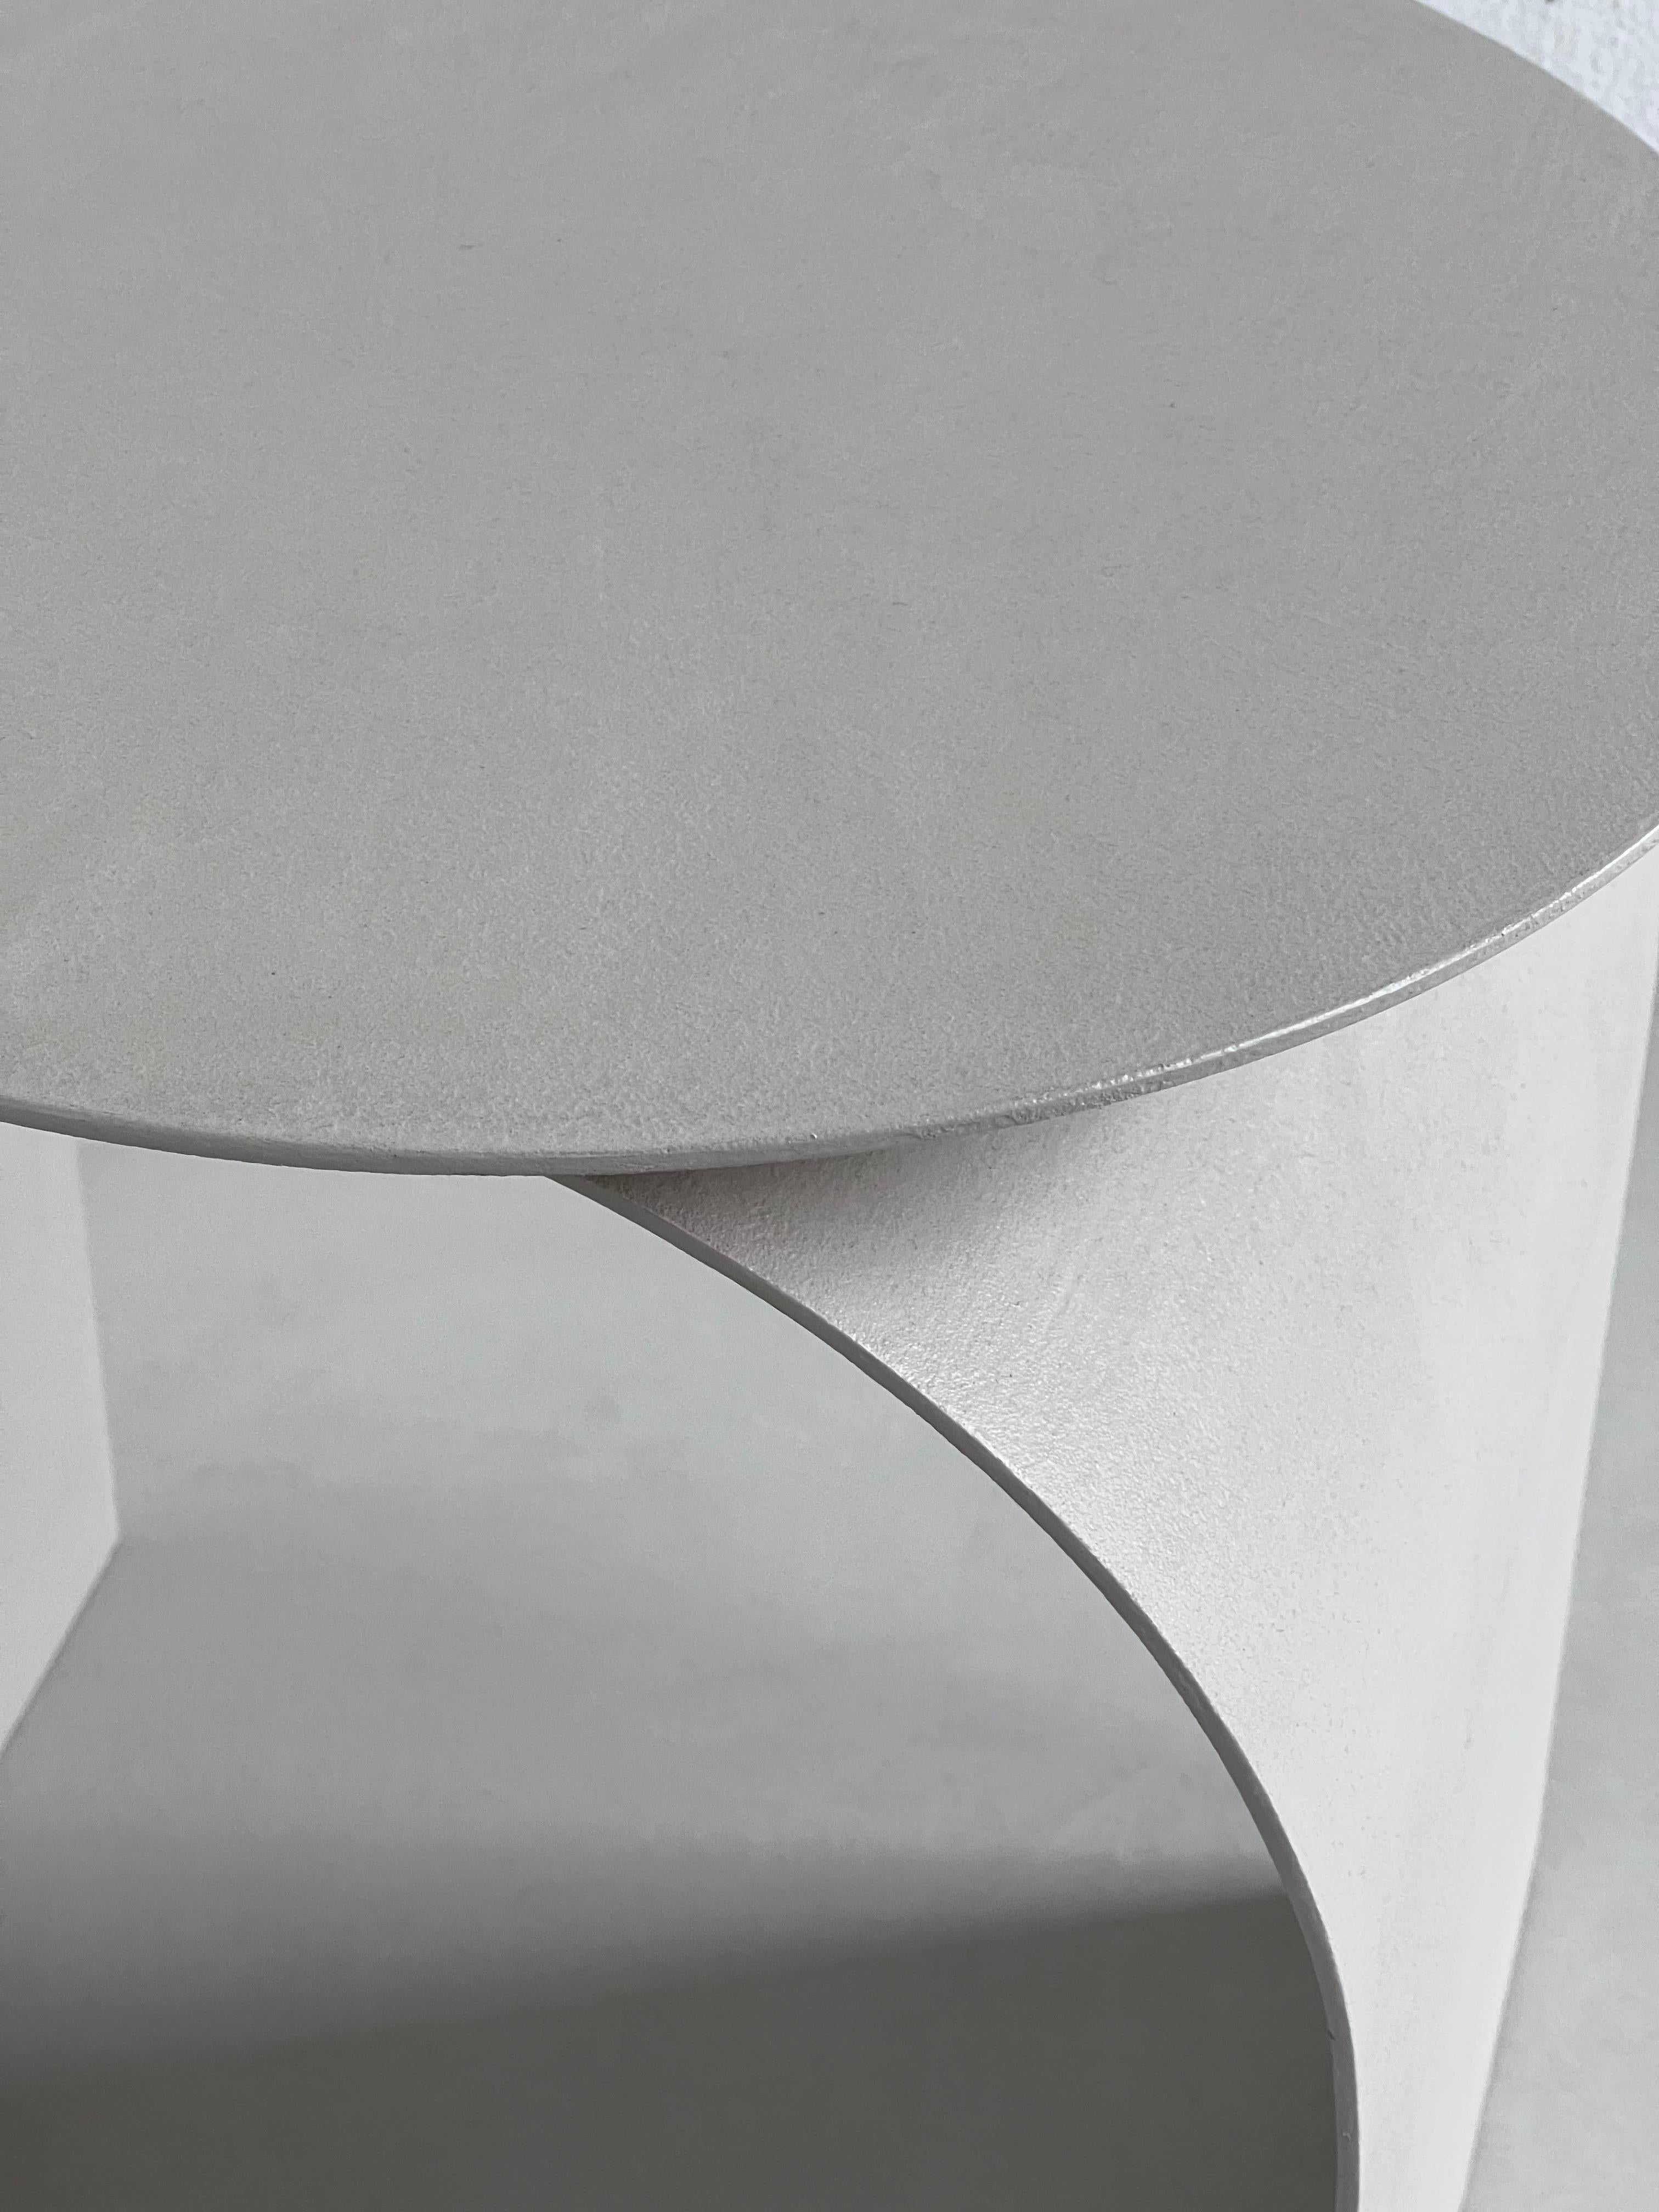 Spinzi Palladium Contemporary Sculptural Side Table, Organic Urban Wabi Finish In New Condition For Sale In Milano, IT